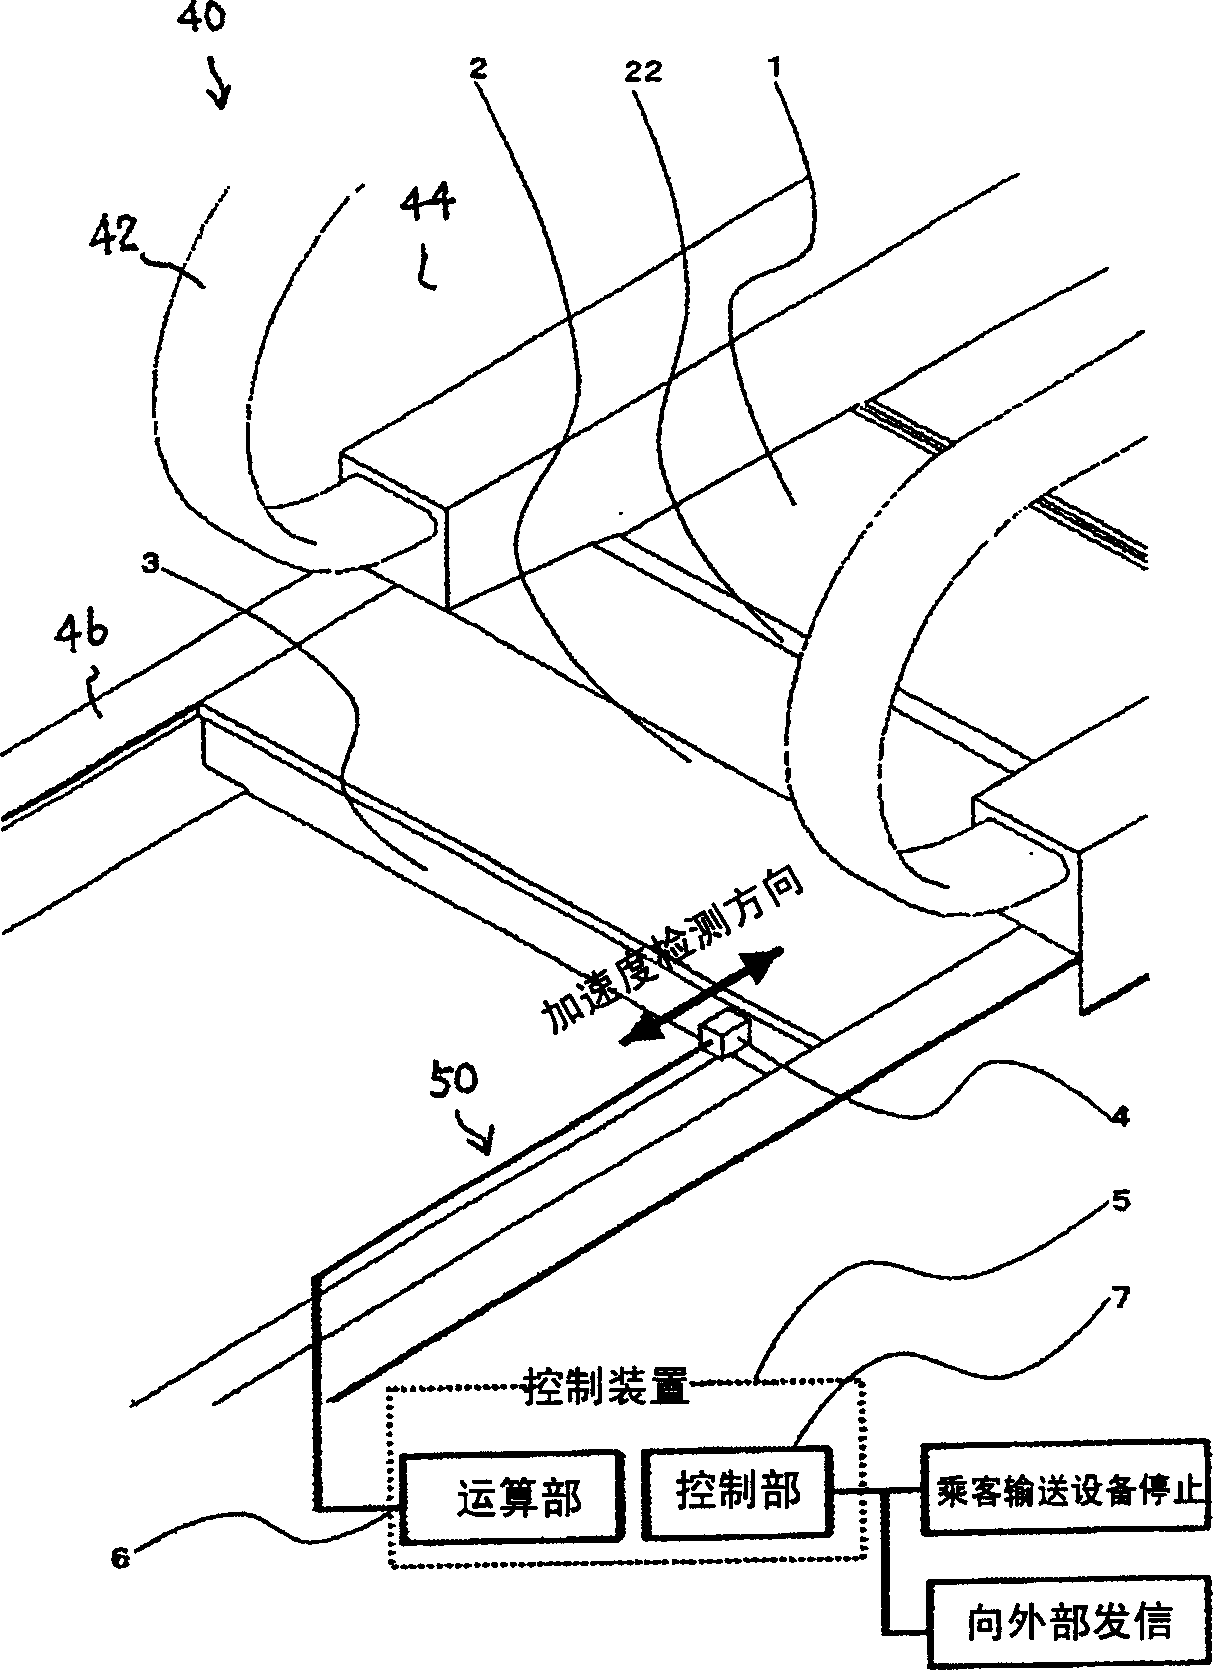 Sefety apparatus of passenger conveying equipment